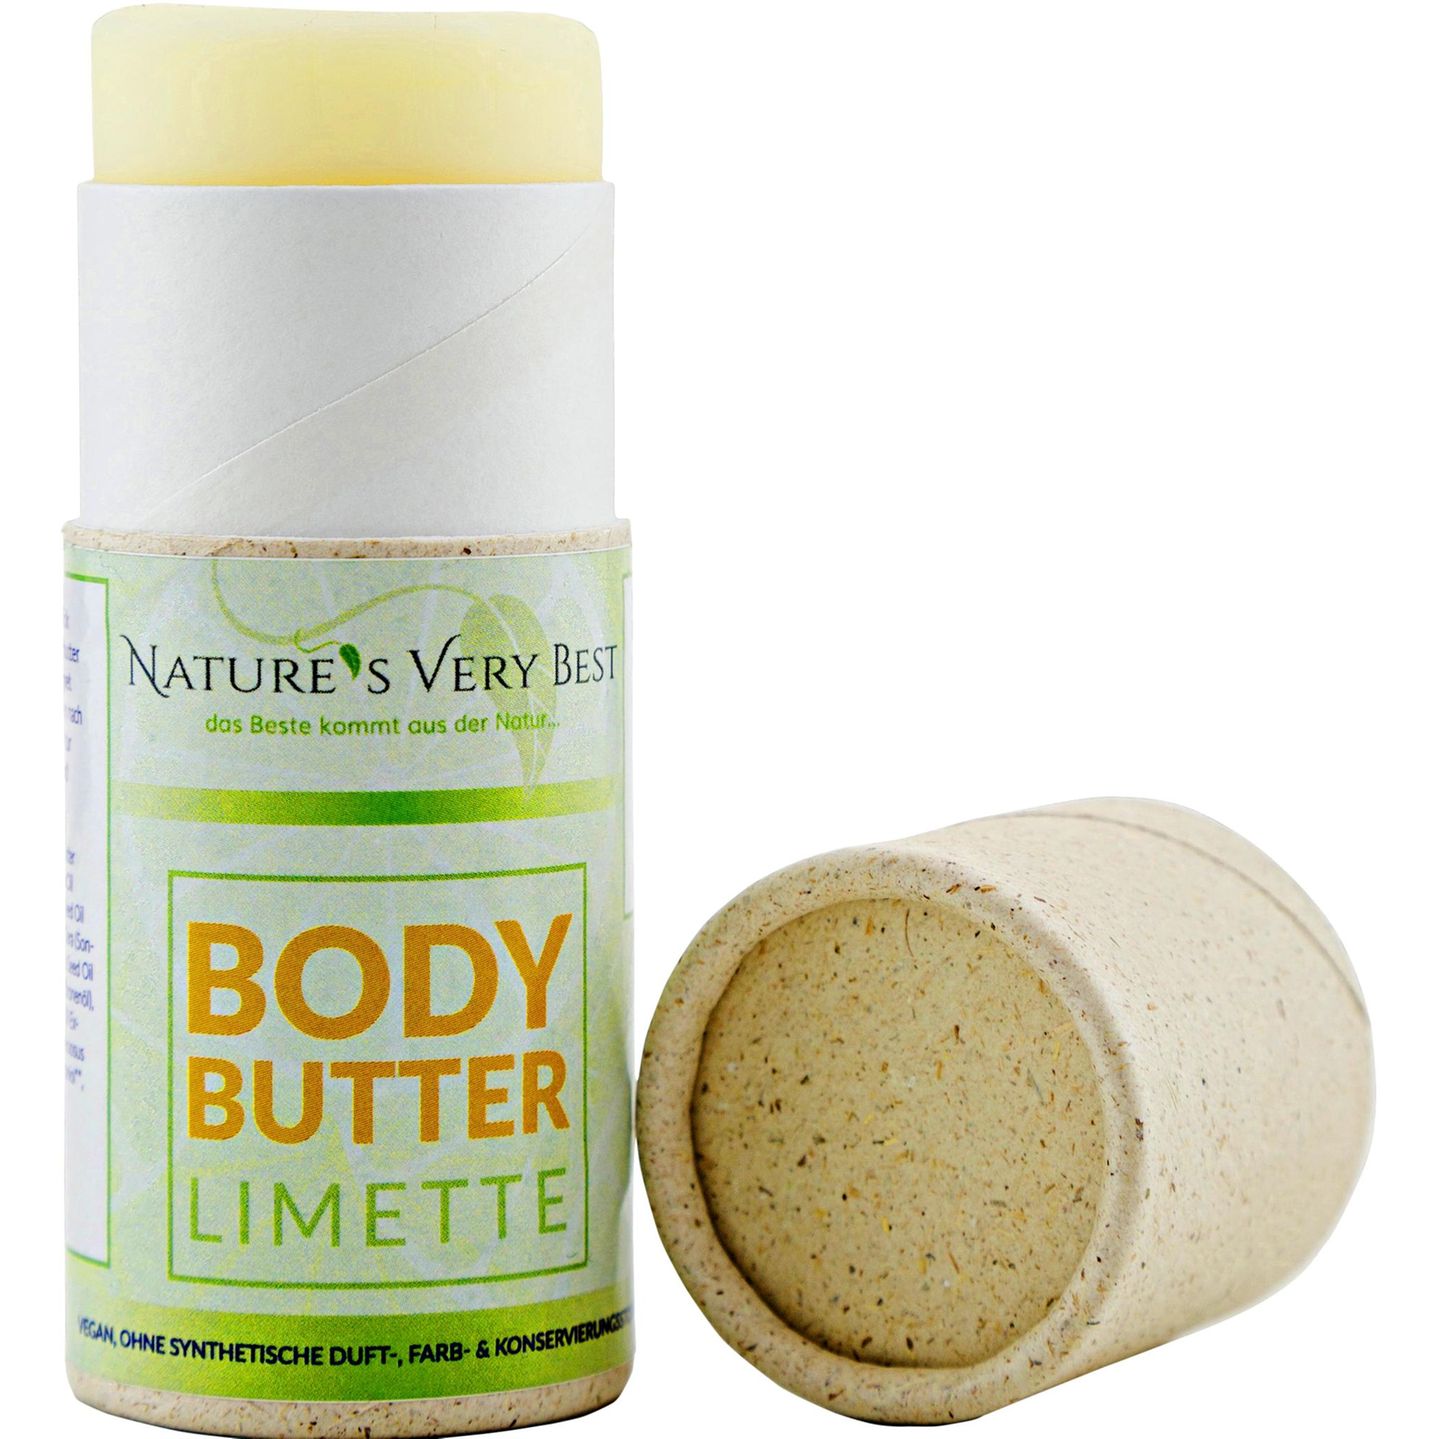 Vegan Beauty: Body Butter